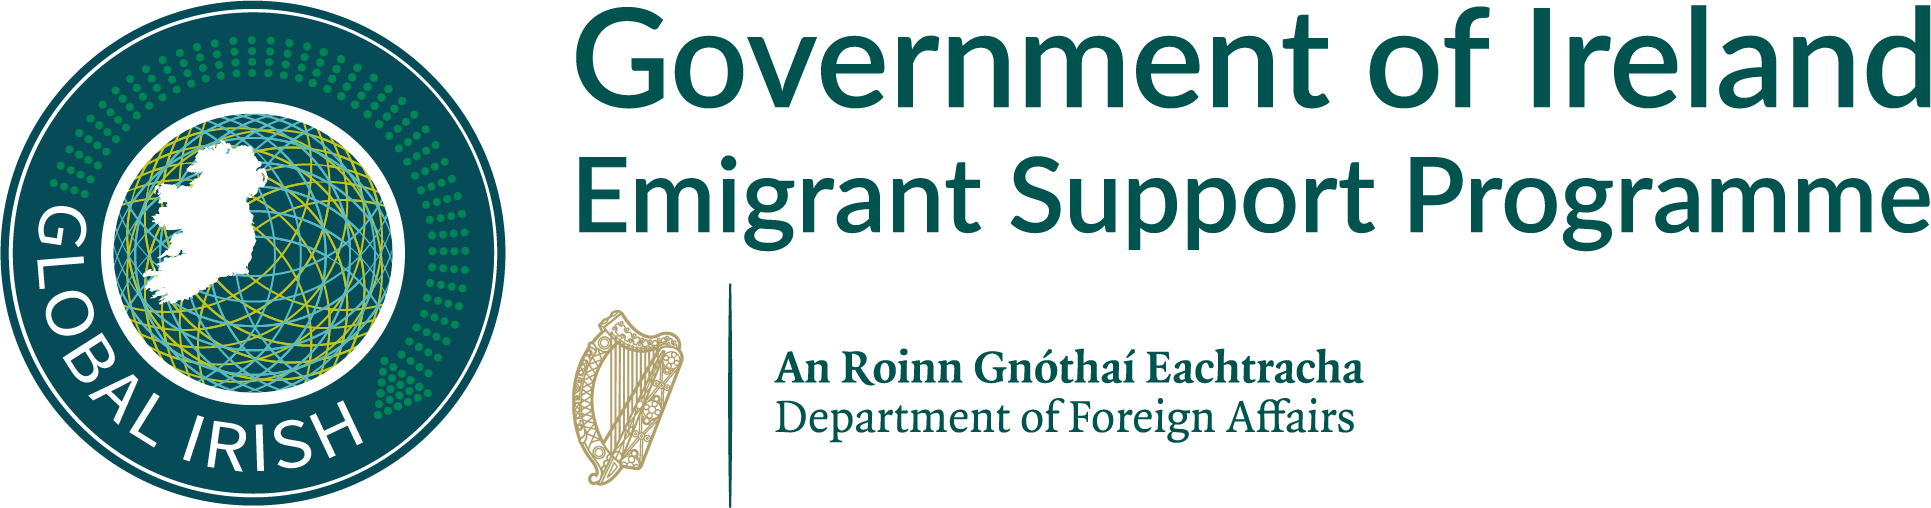 DFA Emigrant Support Programme logo